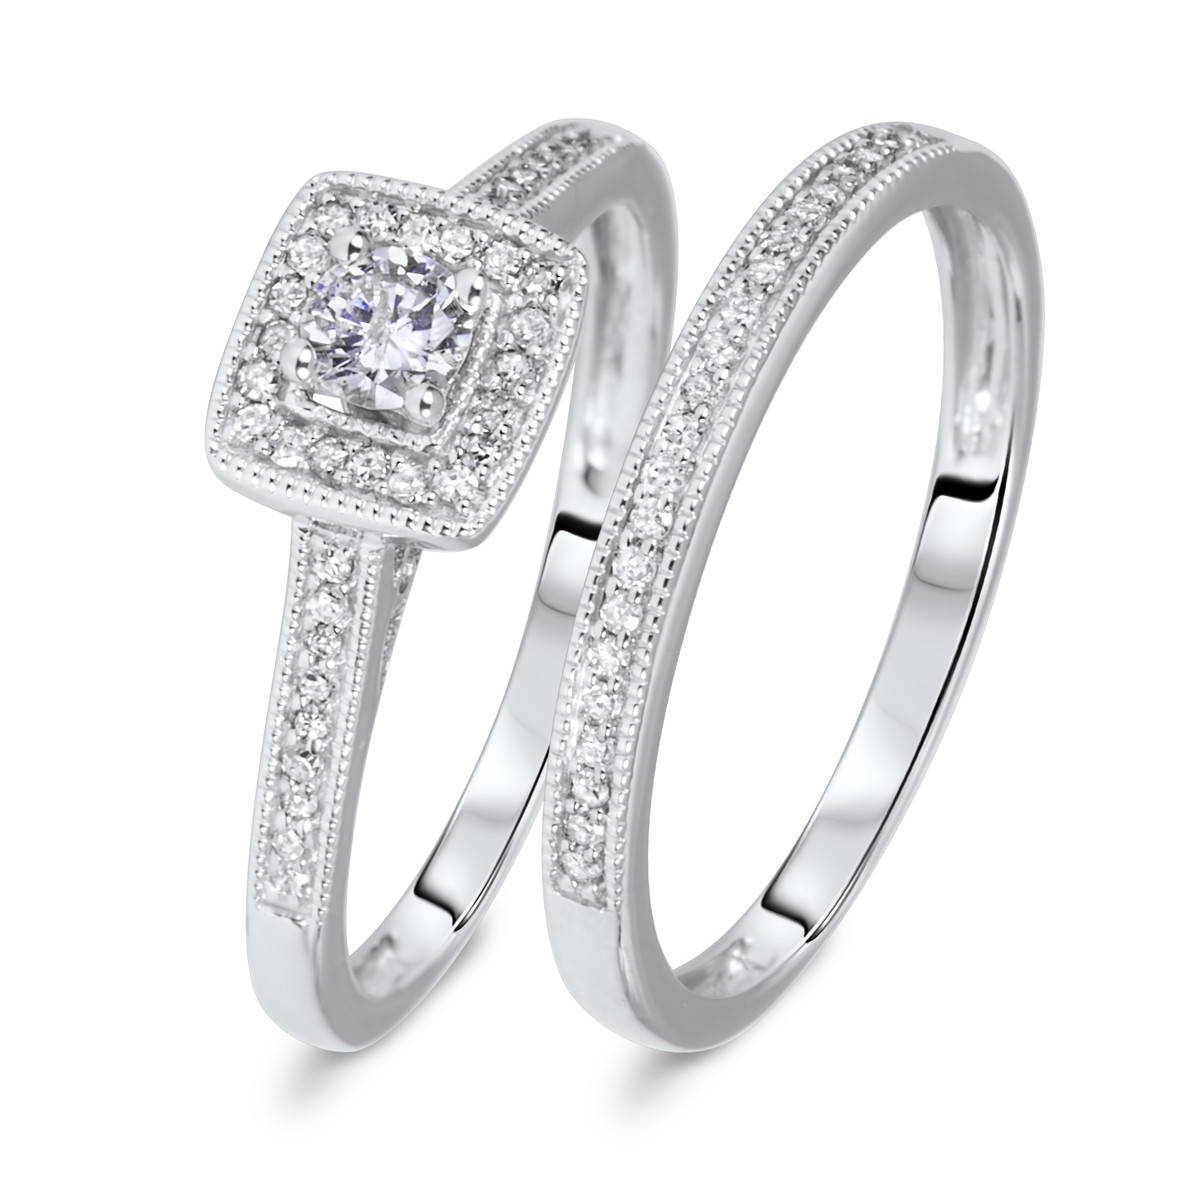 Wedding Ring Sets White Gold
 1 1 3 CT T W Round Cut Diamond La s Bridal Wedding